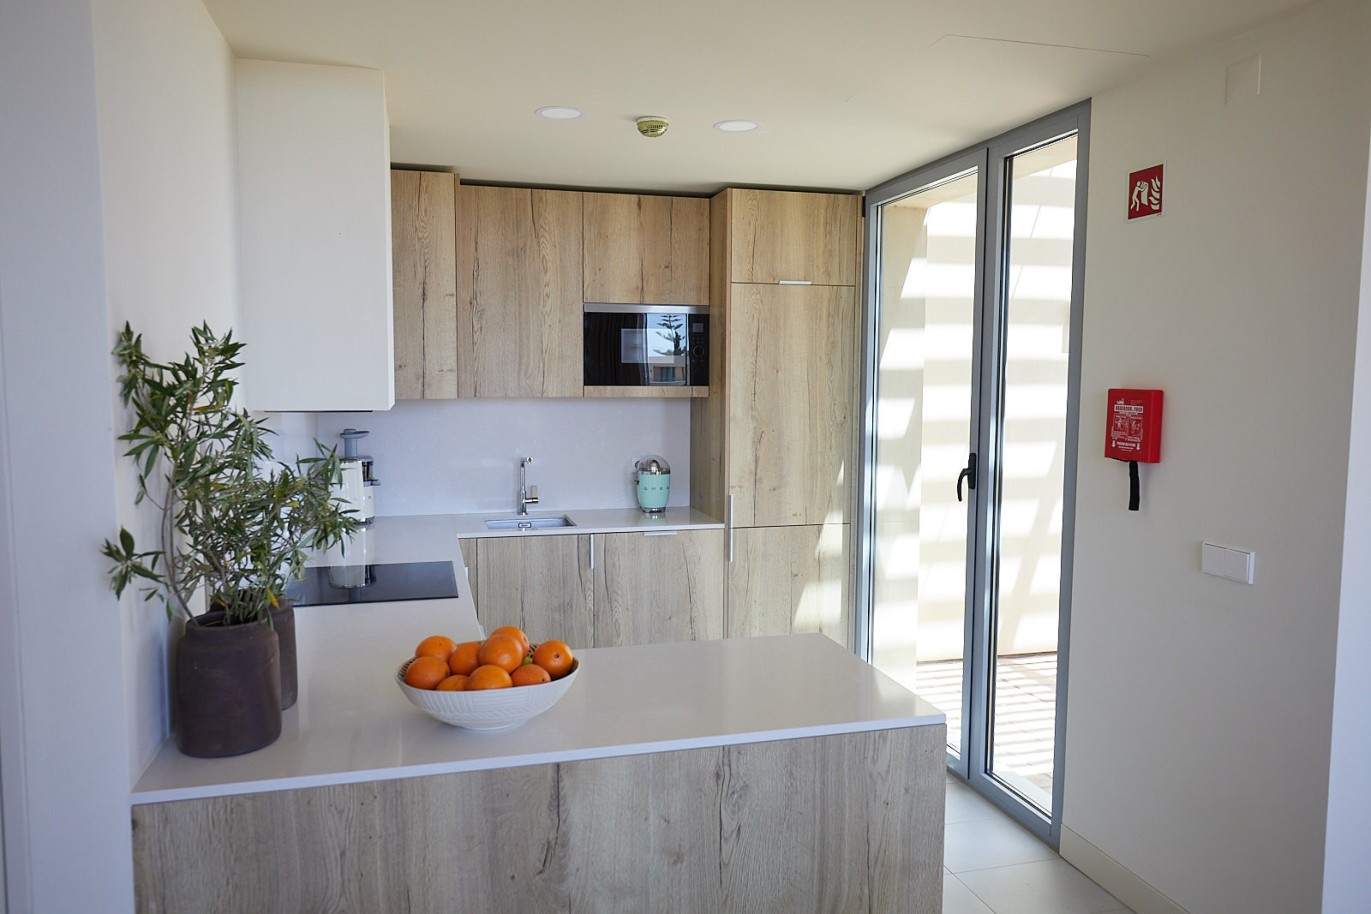 2 bedroom apartment in resort, for sale in Porches, Algarve_229086